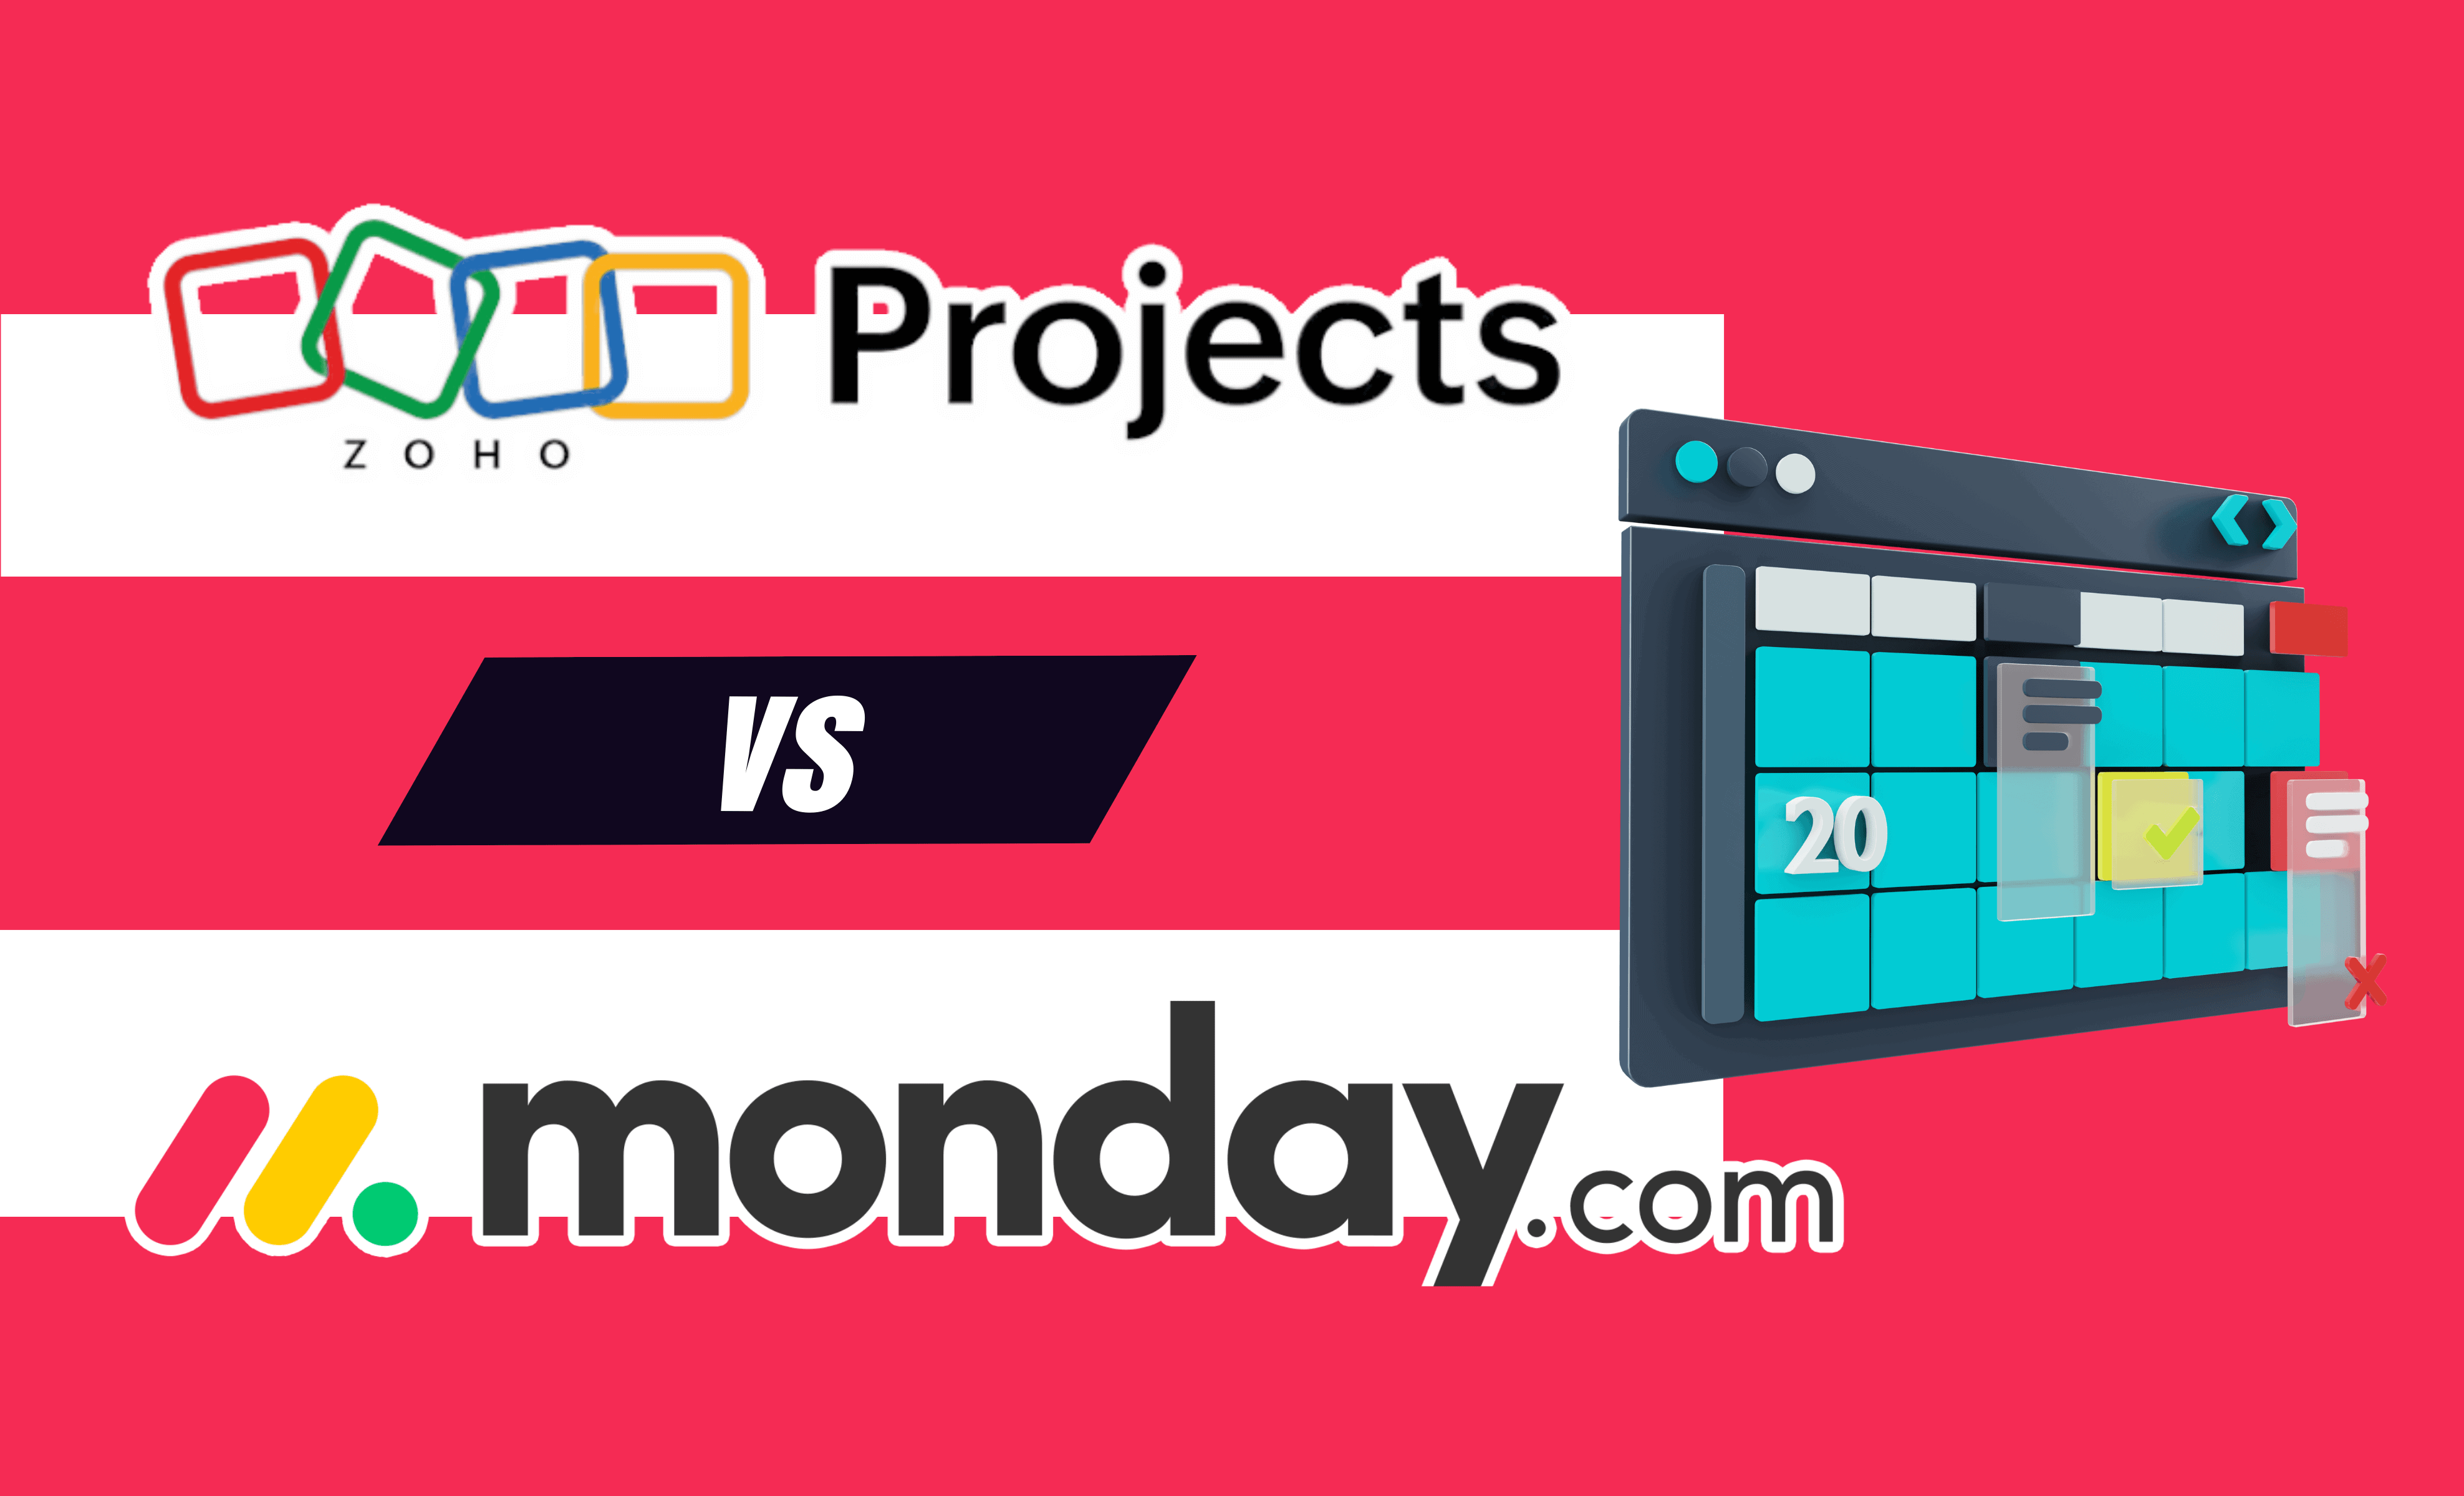 Zoho Projects vs Monday.com